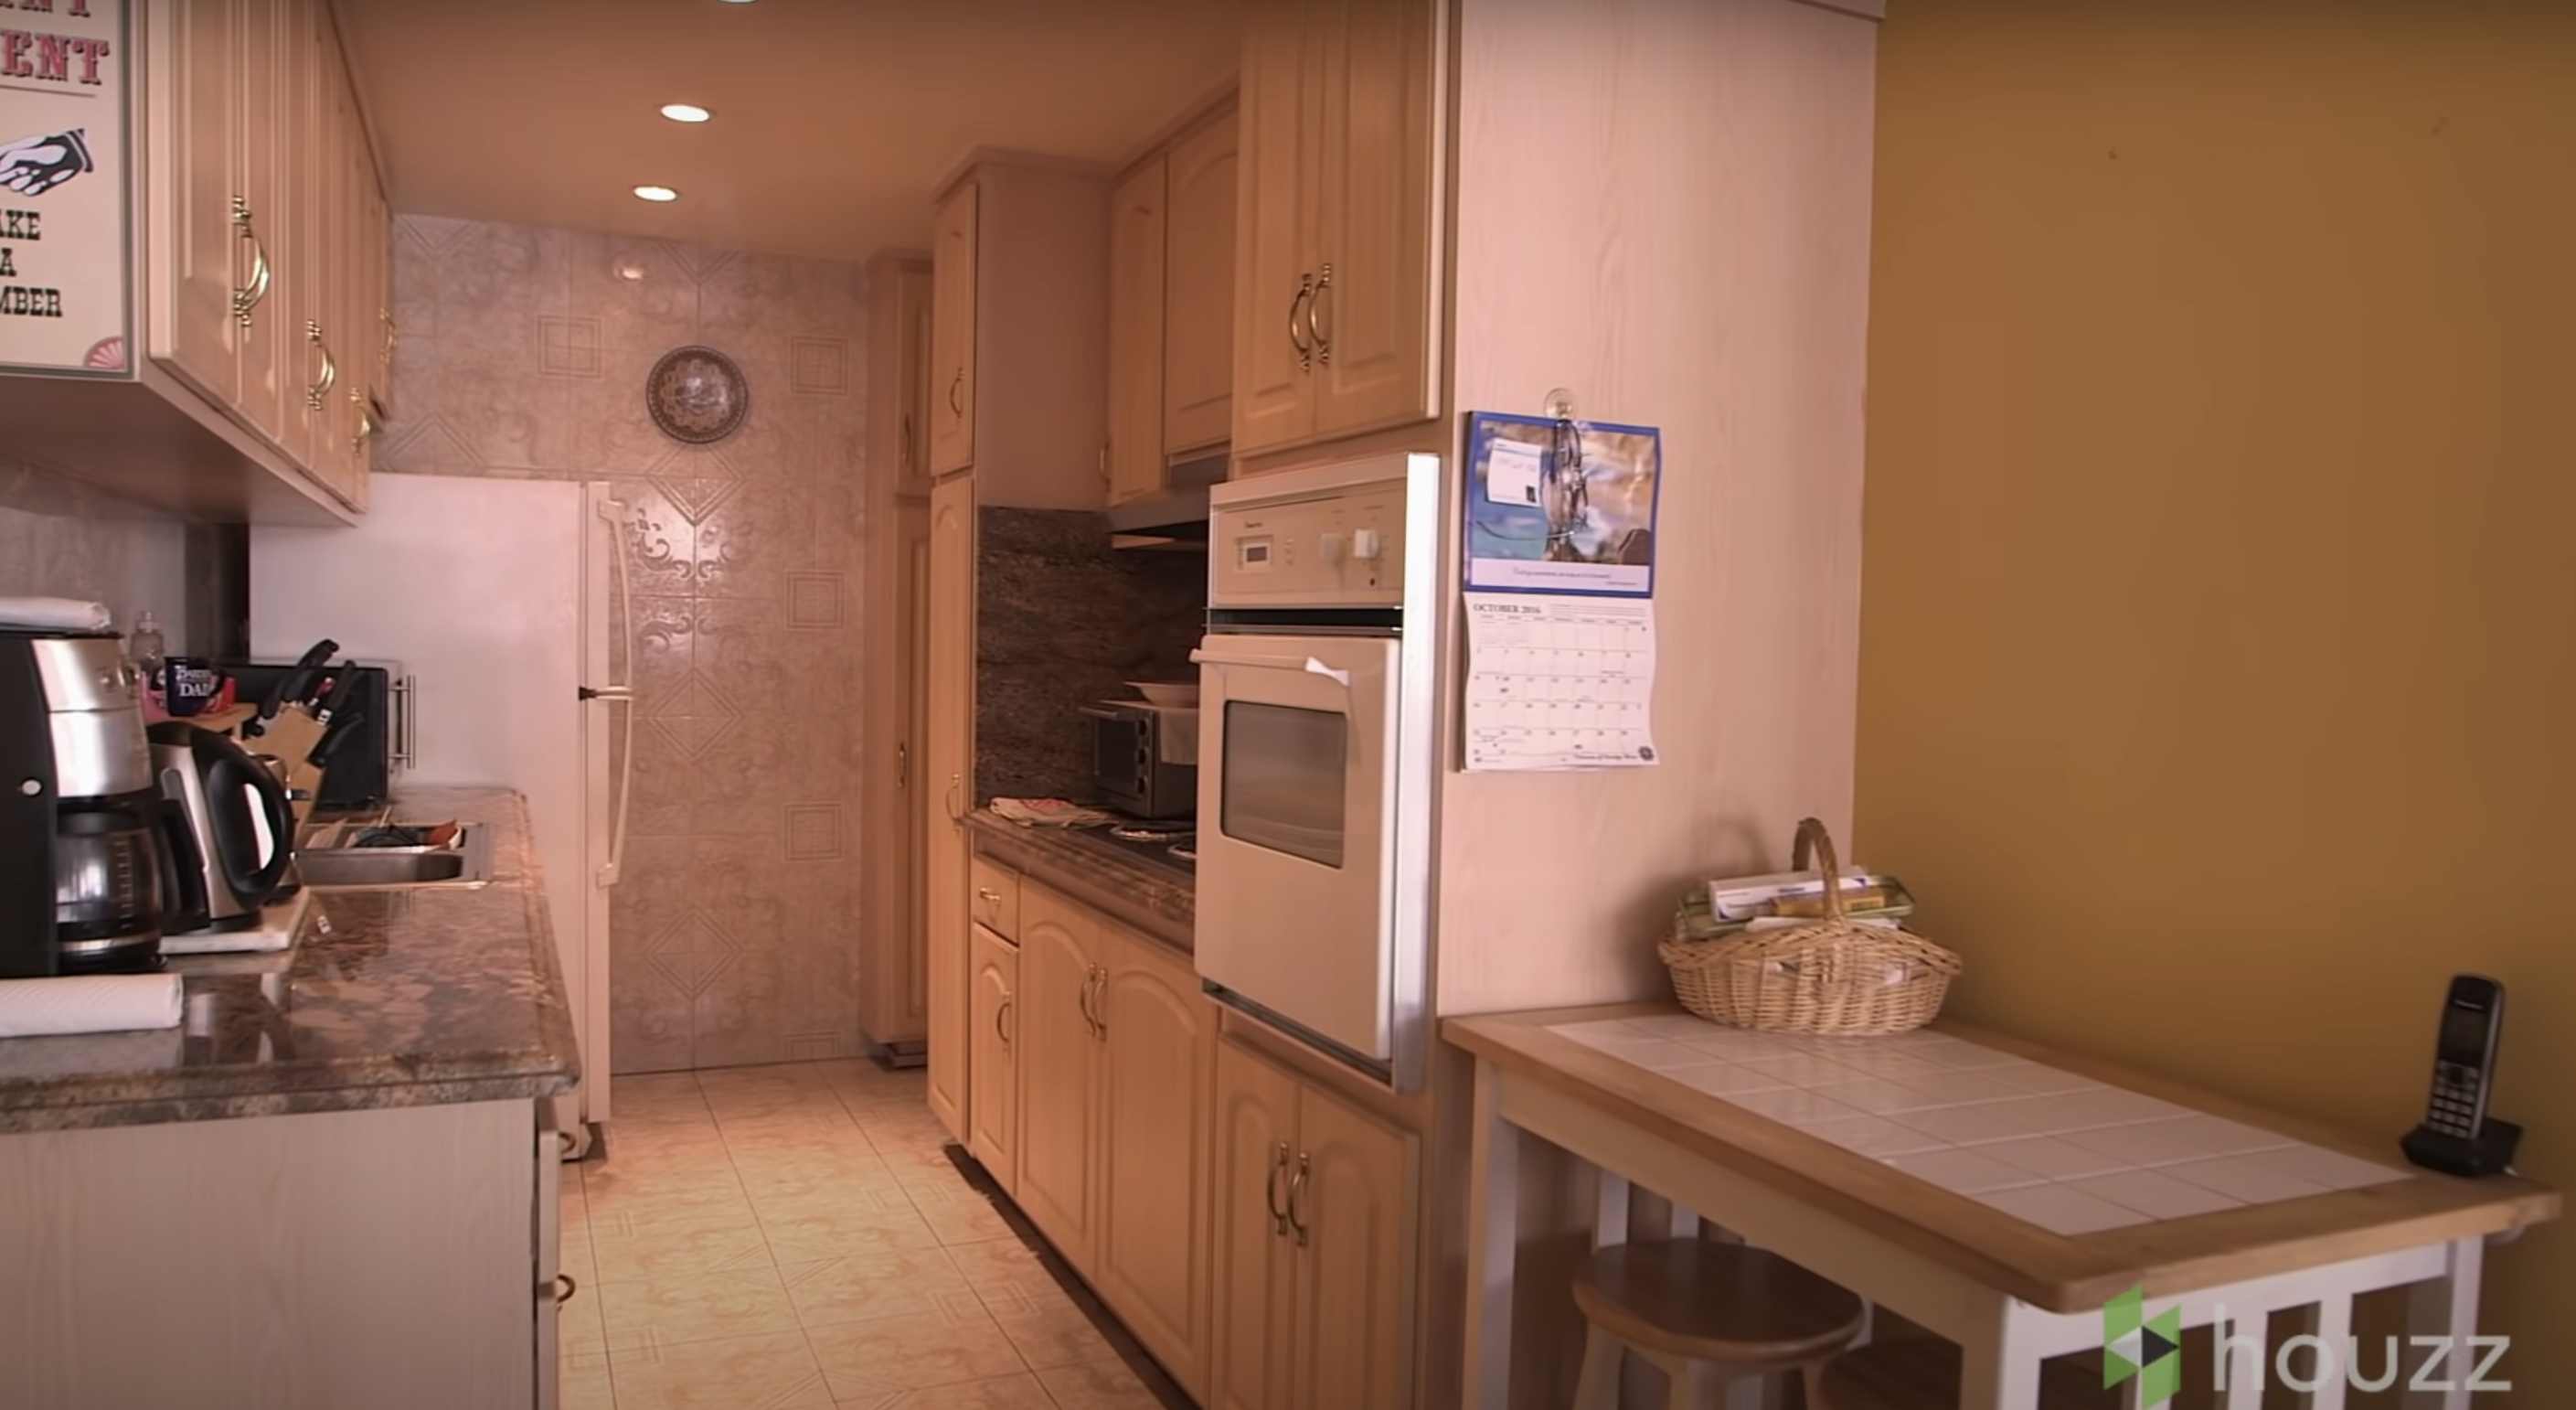 The kitchen area of Mila Kunis' parents' condo | Source: Youtube.com/HouzzTV